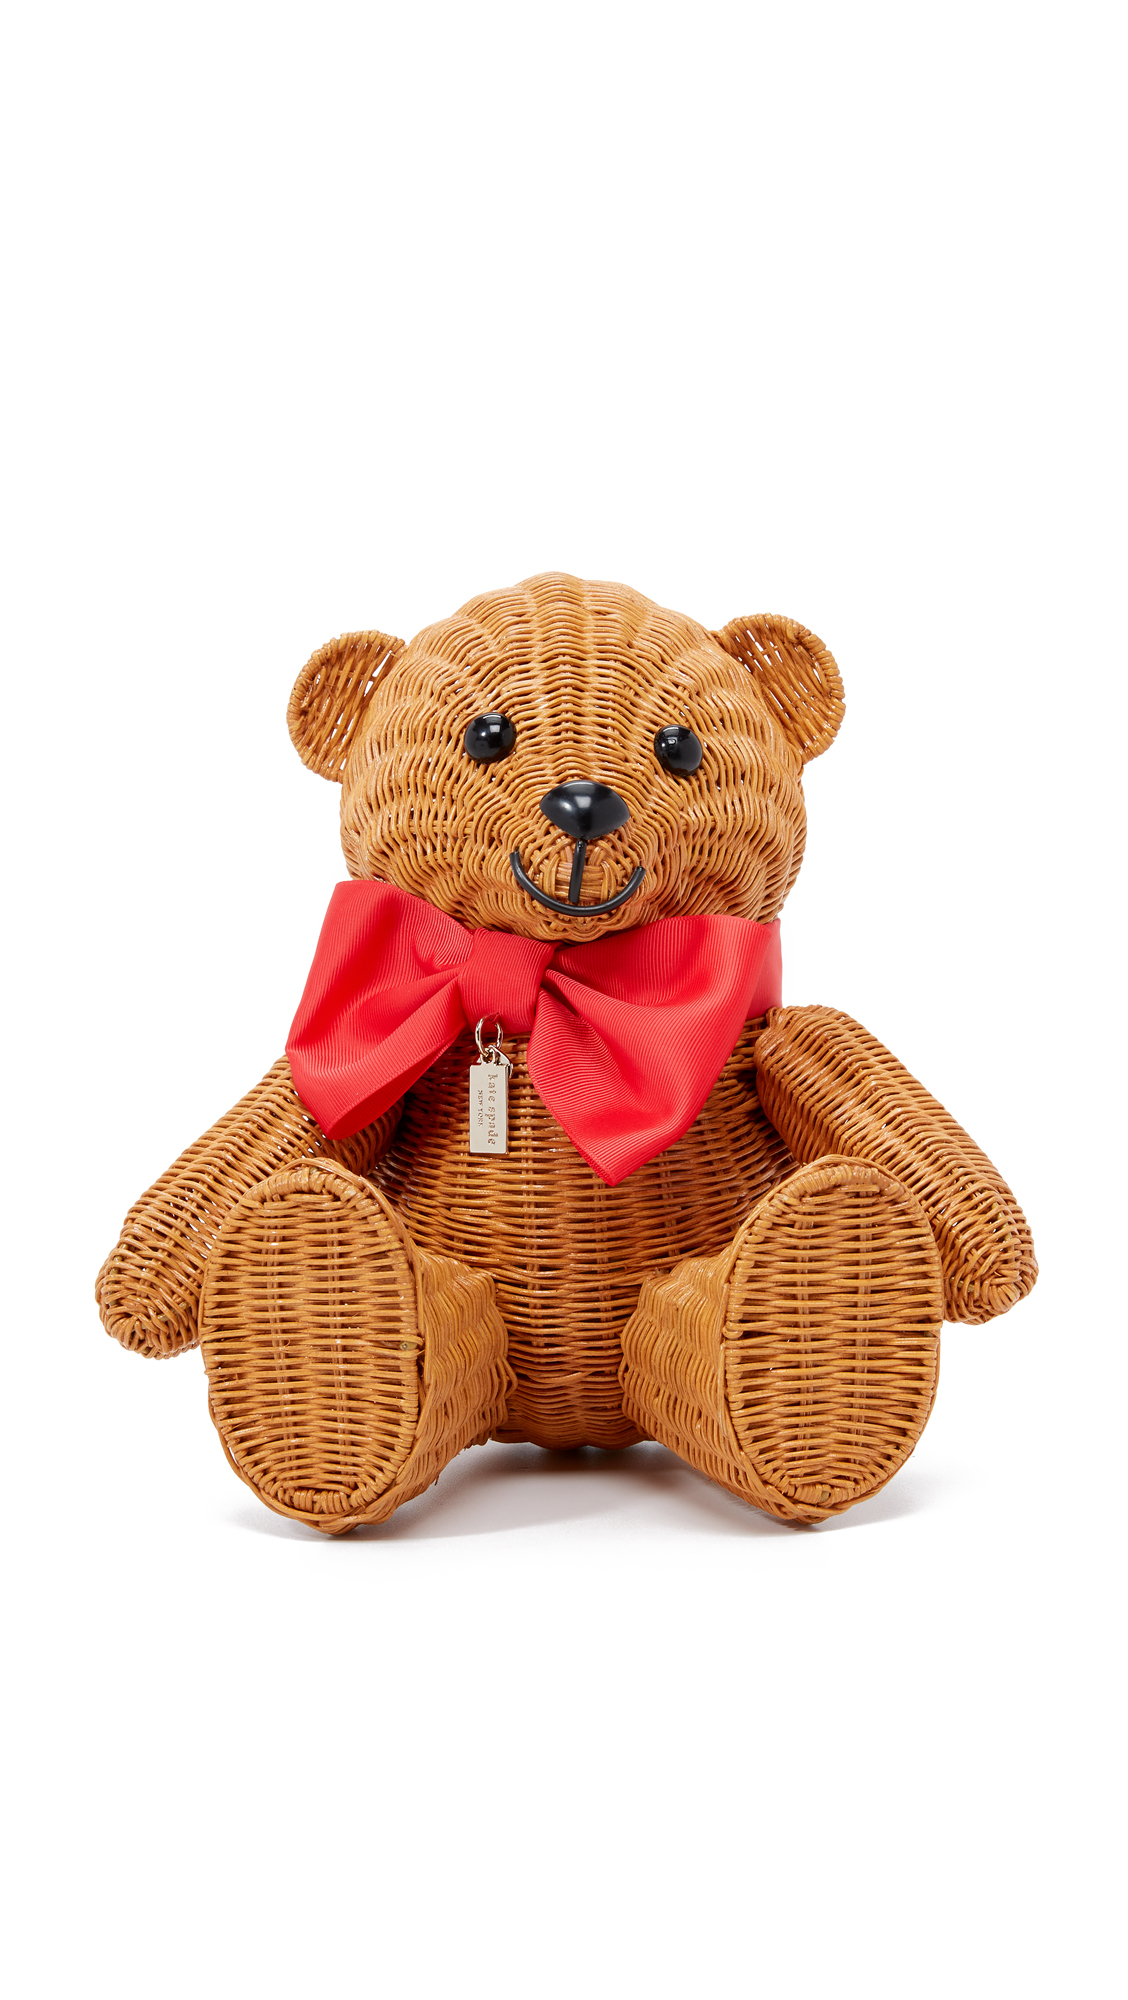 Teddy Bear Purse & Plush Teddy Bear Both New With Tags. | eBay